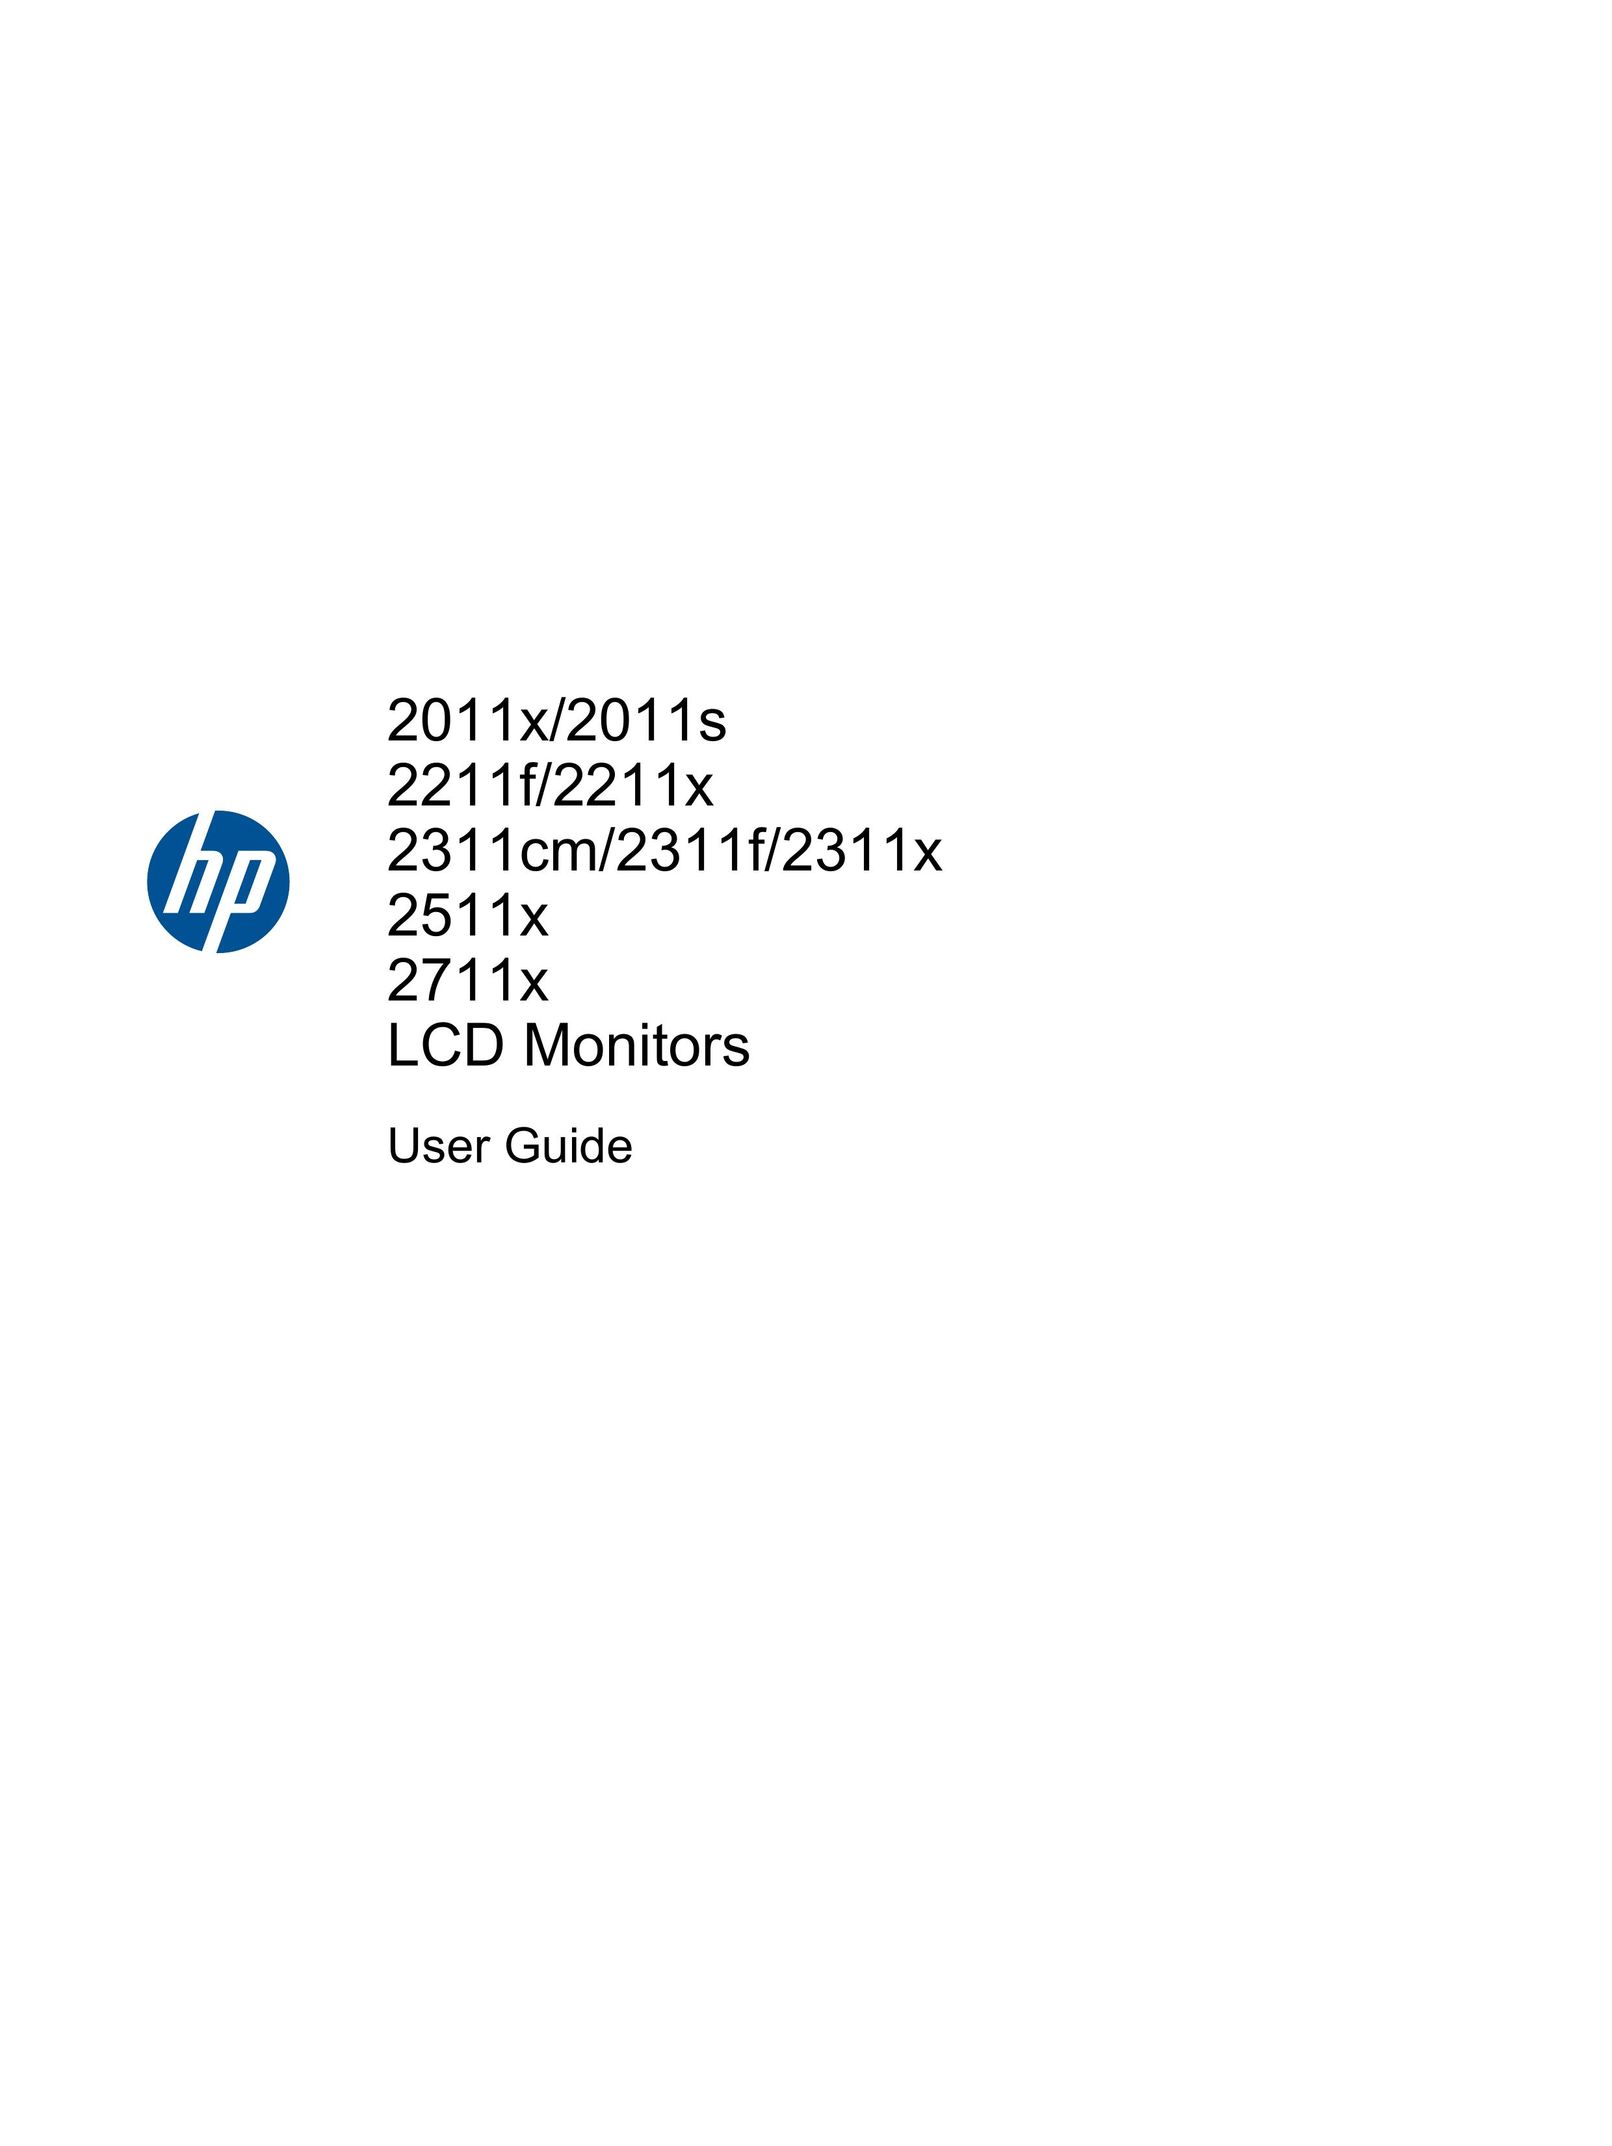 HP (Hewlett-Packard) 2311cm/2311f/2311x Car Video System User Manual